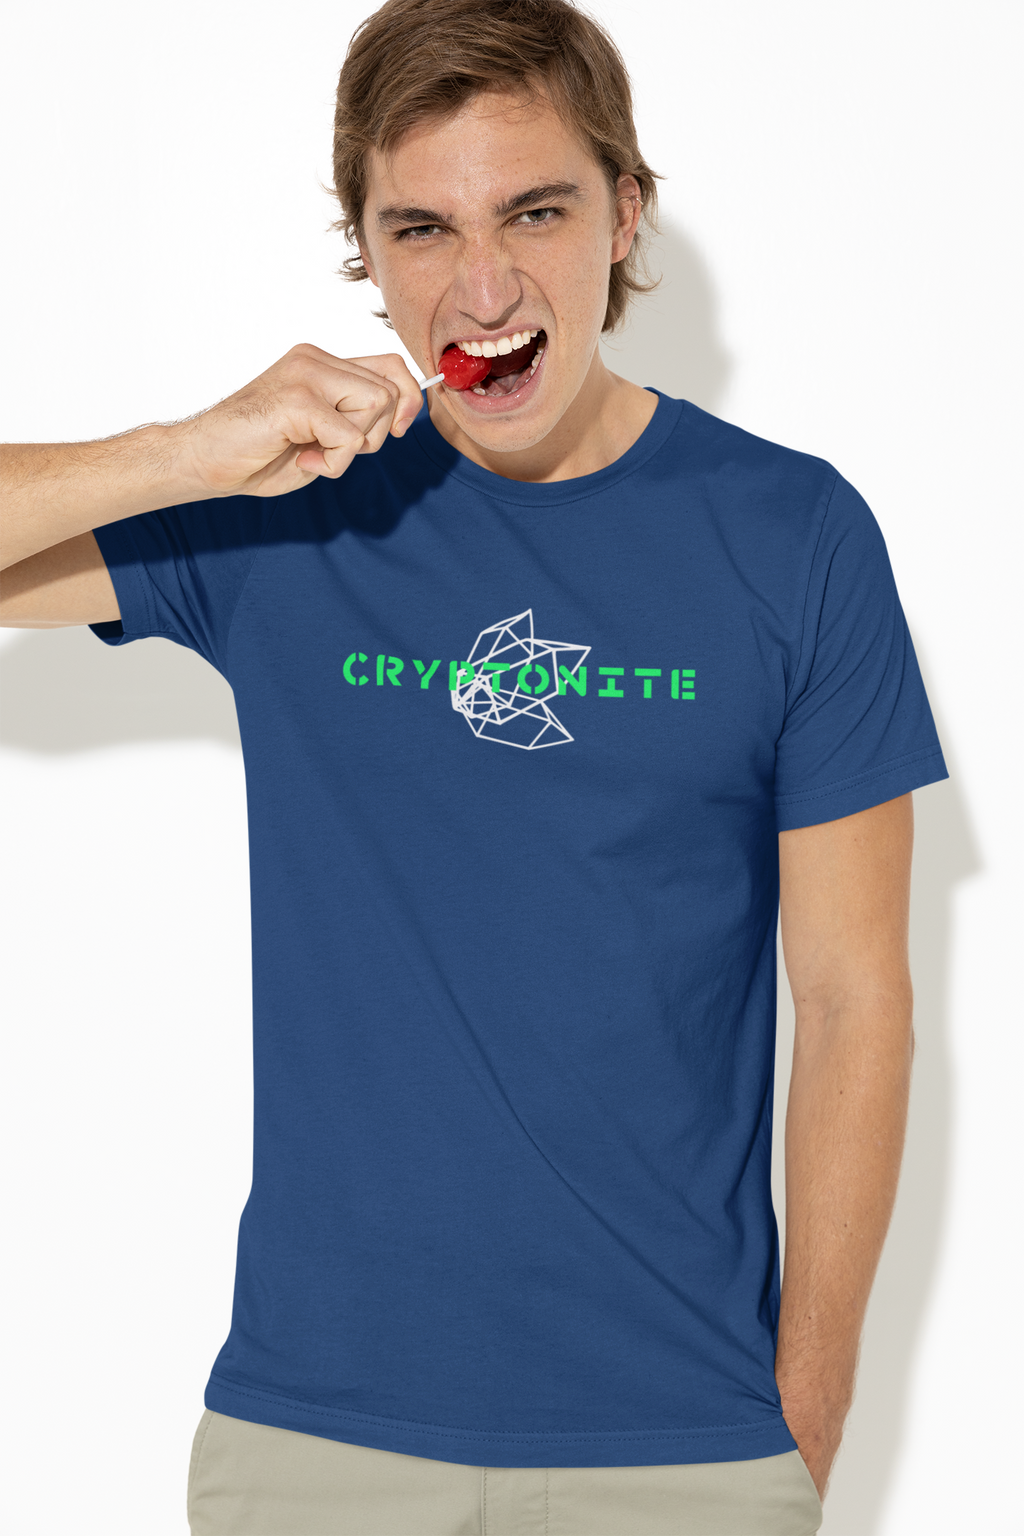 "Cryptonite" Adult T-shirt